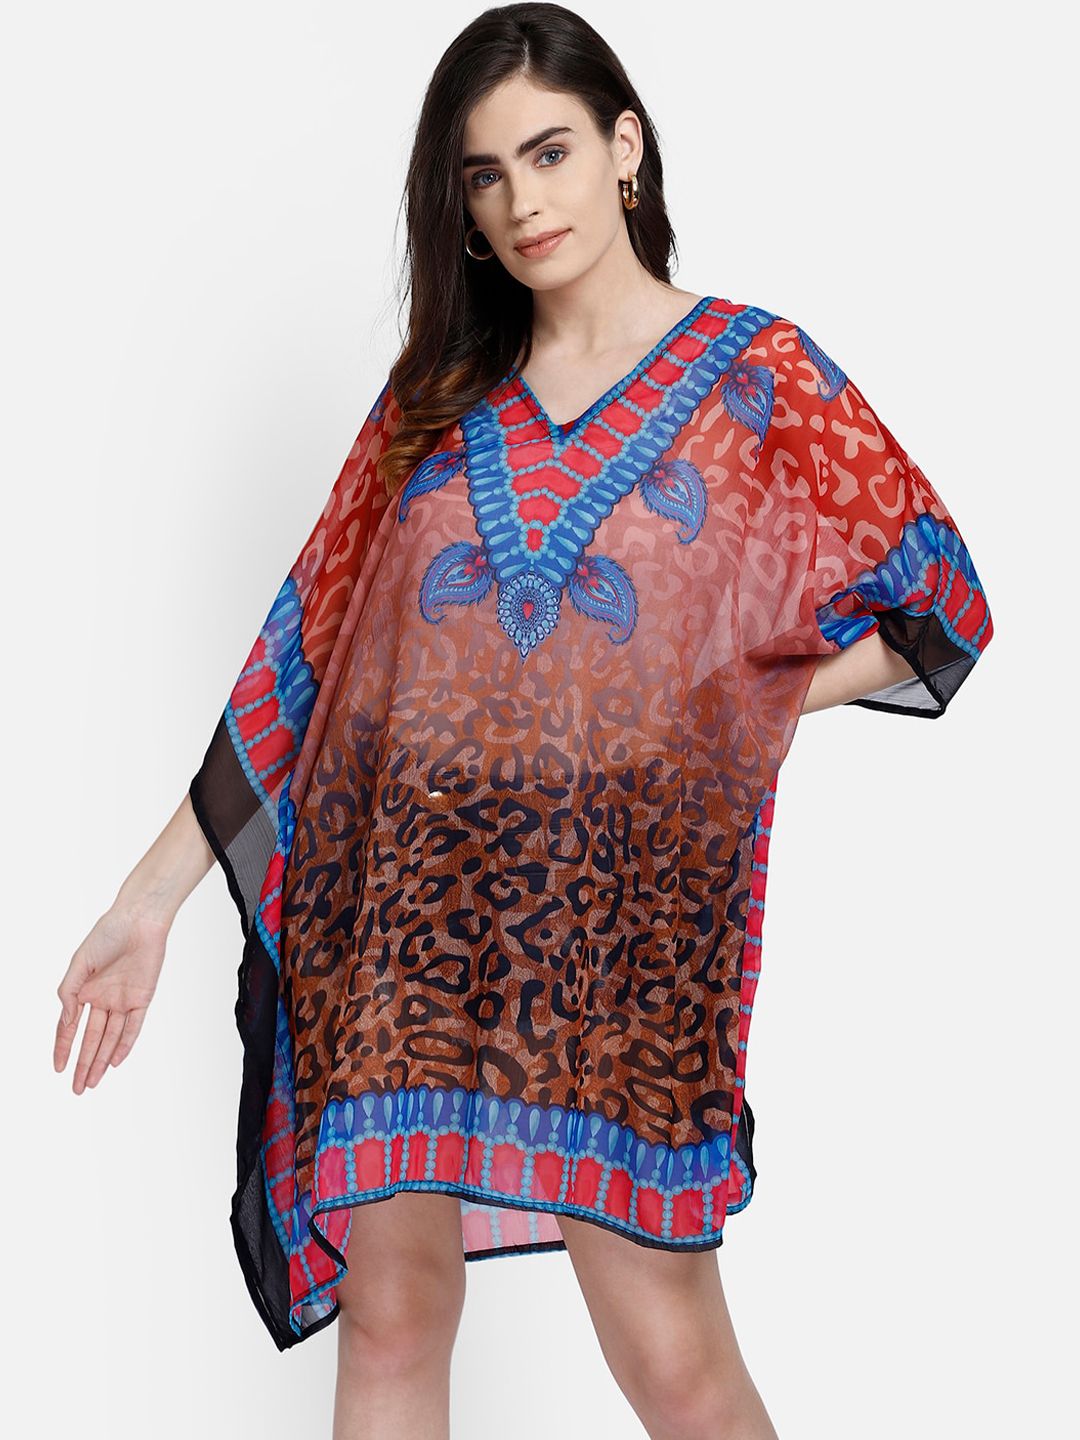 Aditi Wasan Multicoloured Kaftan Dress Price in India